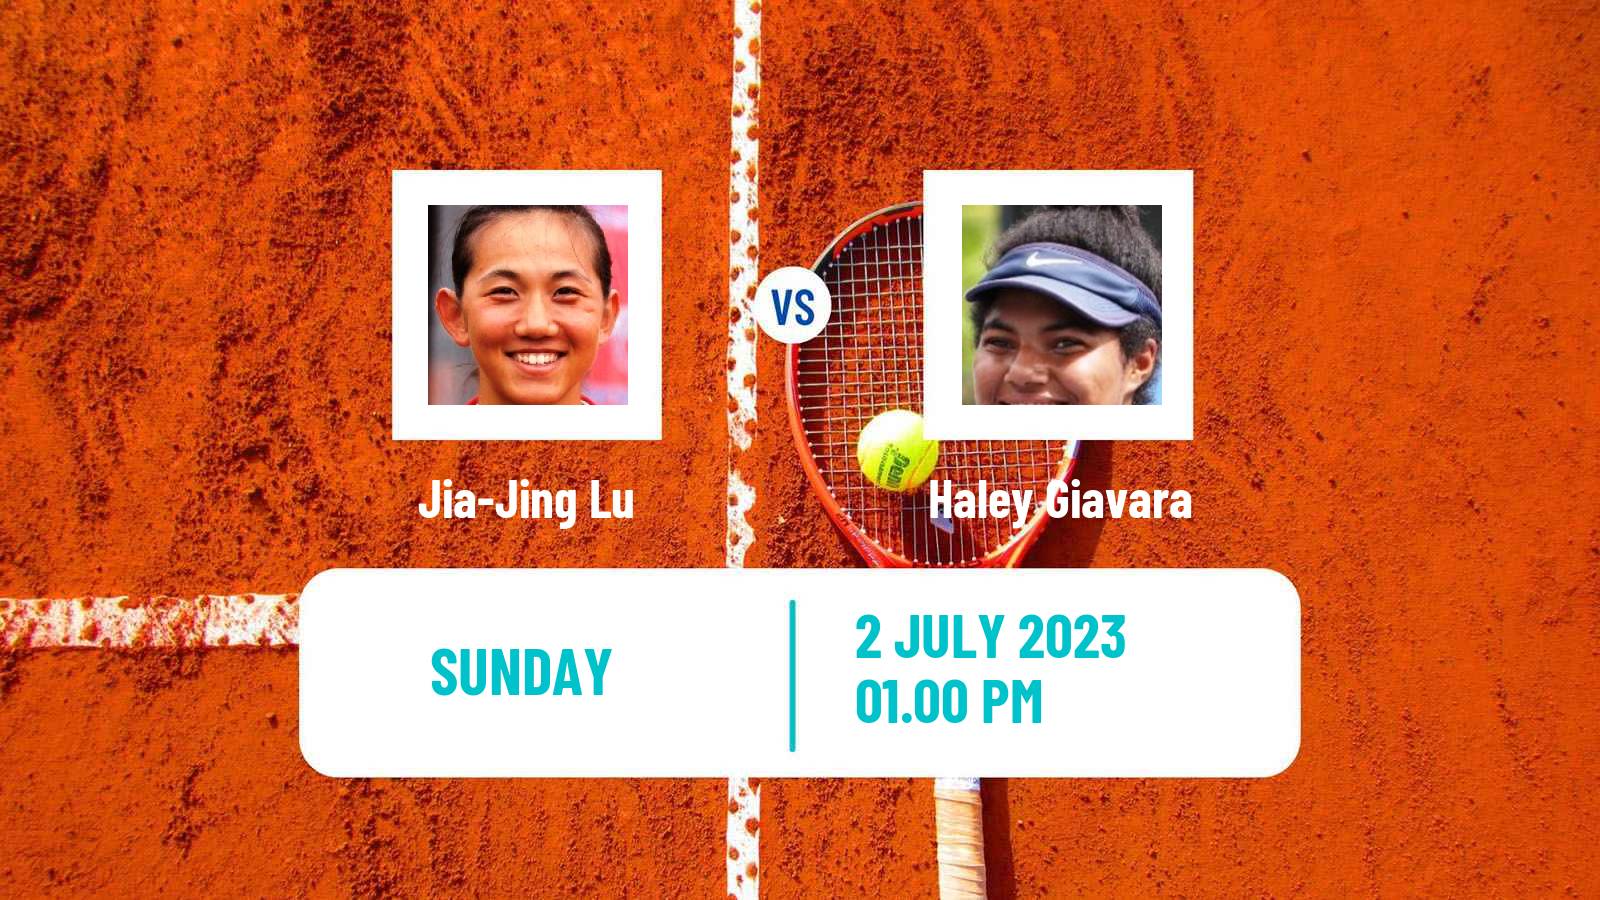 Tennis ITF W15 Irvine Ca Women Jia-Jing Lu - Haley Giavara